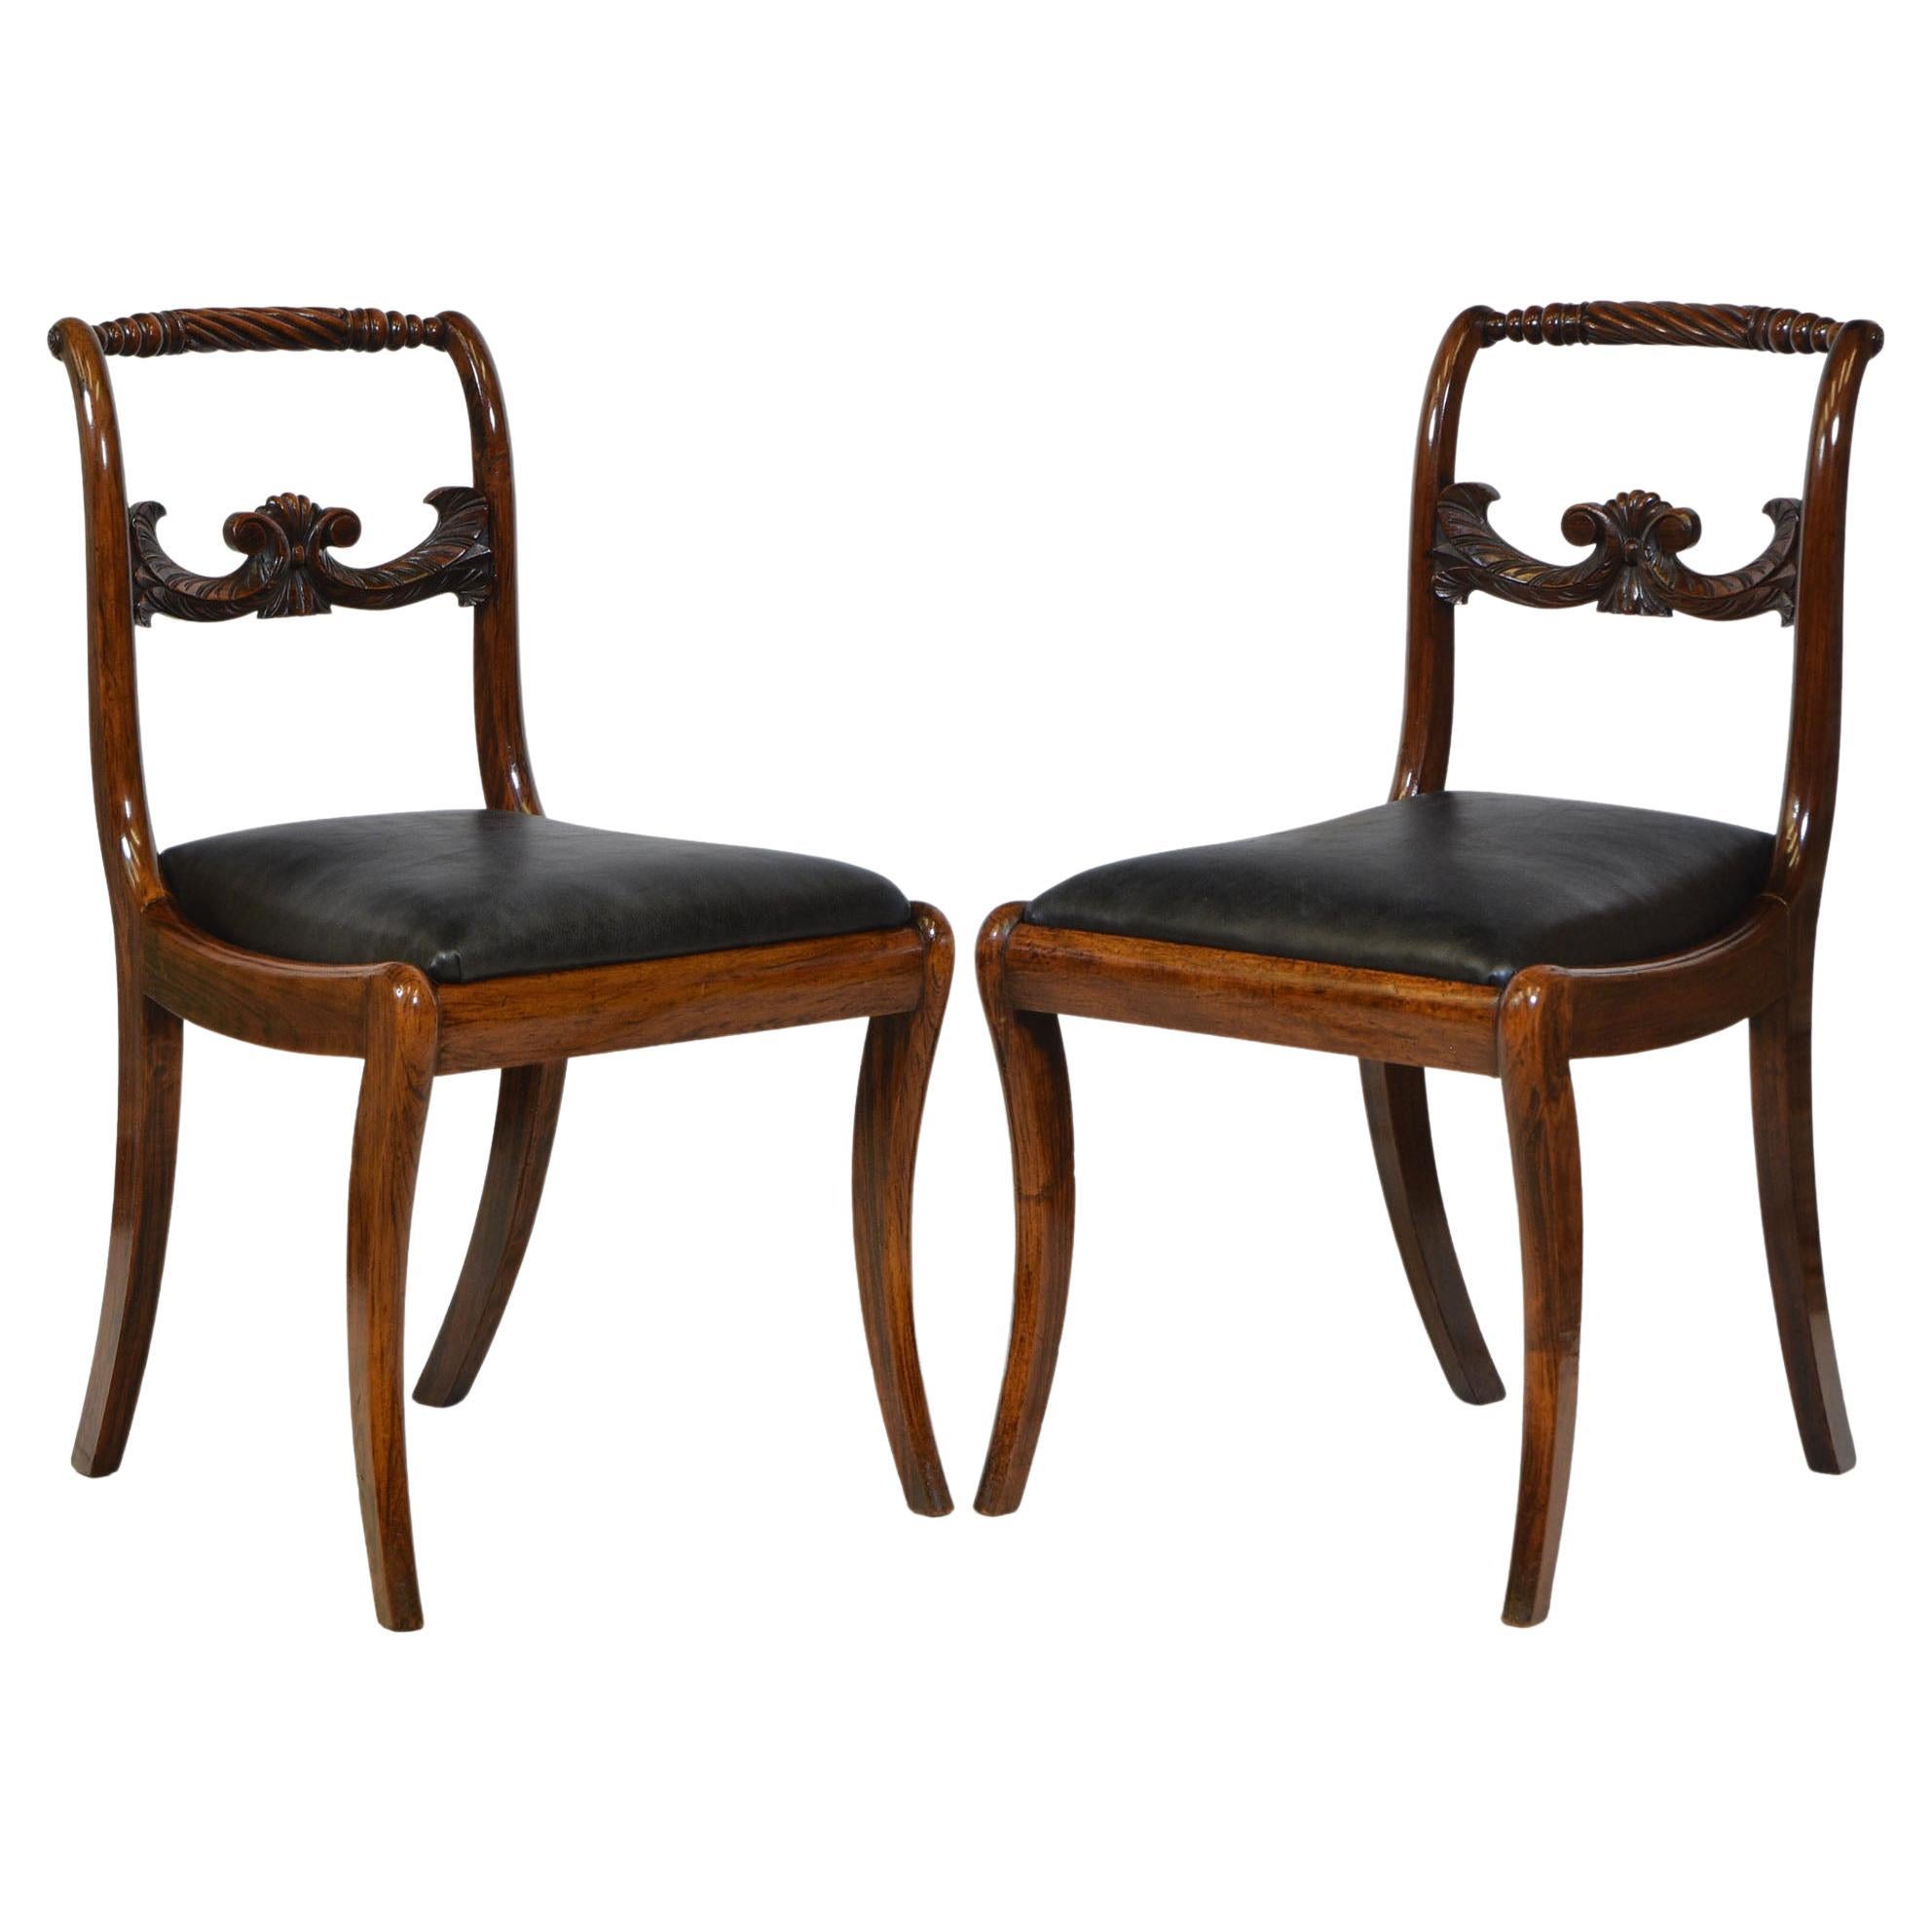 Paar Trafalgar-Stühle aus Rosenholz und Leder im Regency-Stil, um 1820